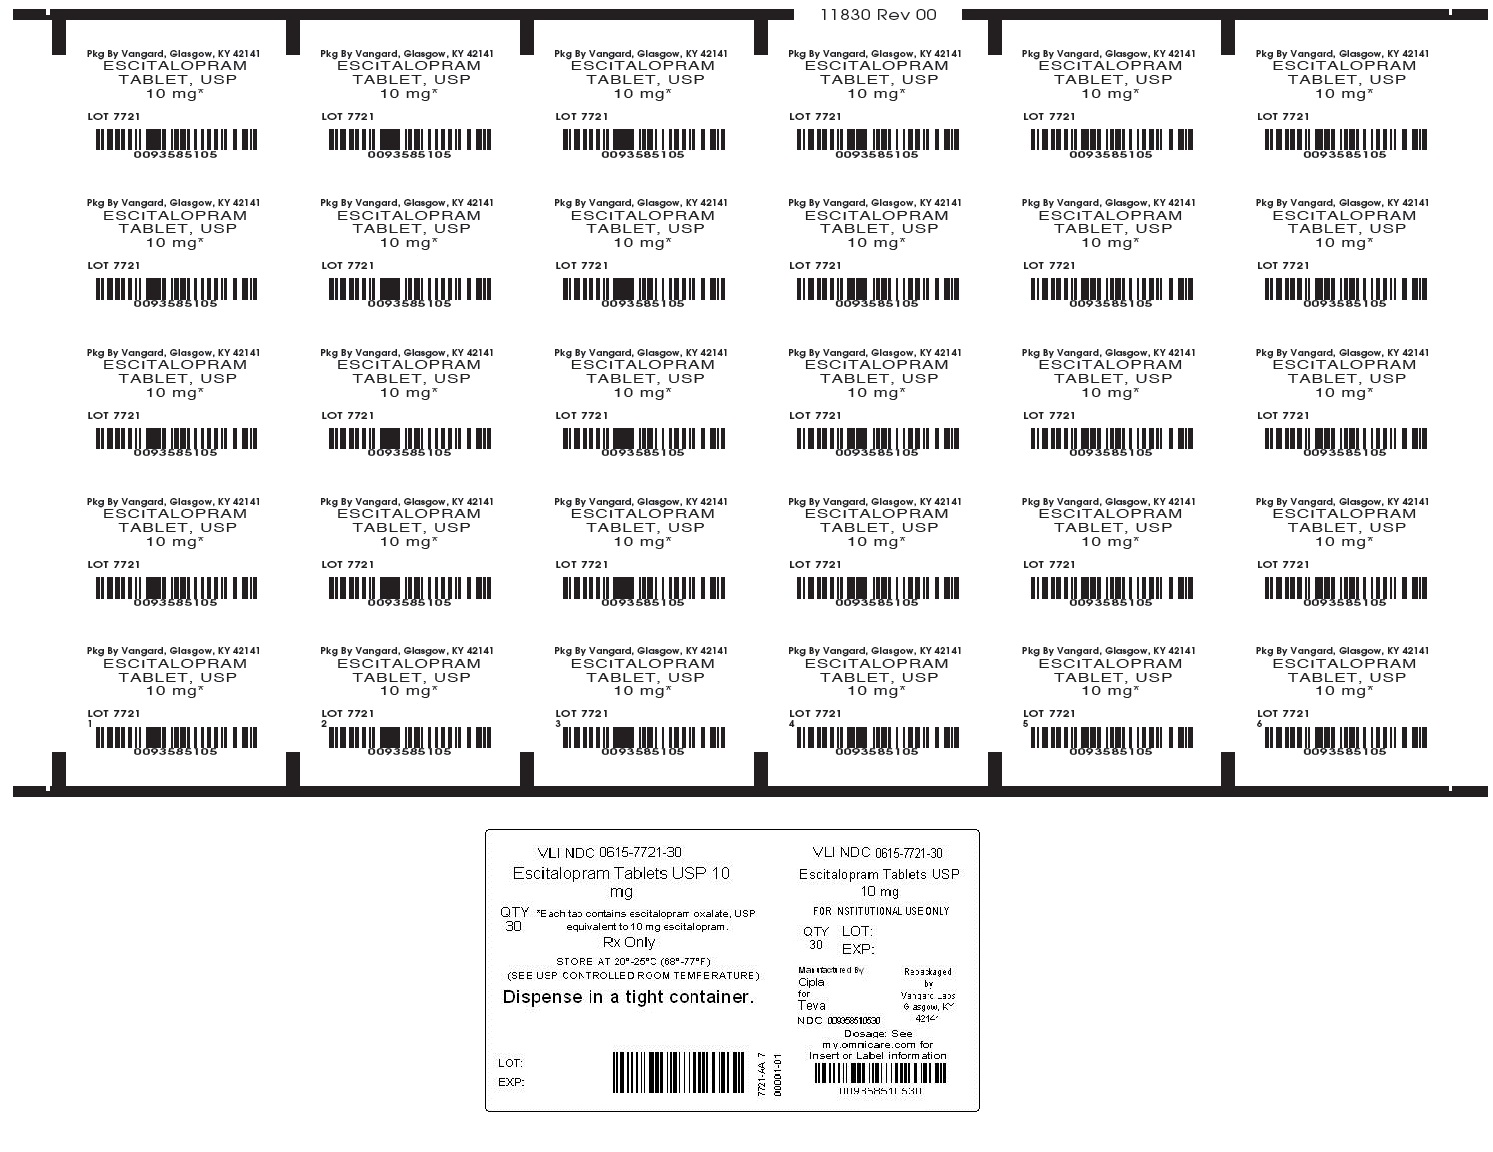 Escitalopram Tablet, USP 10mg unit-dose label